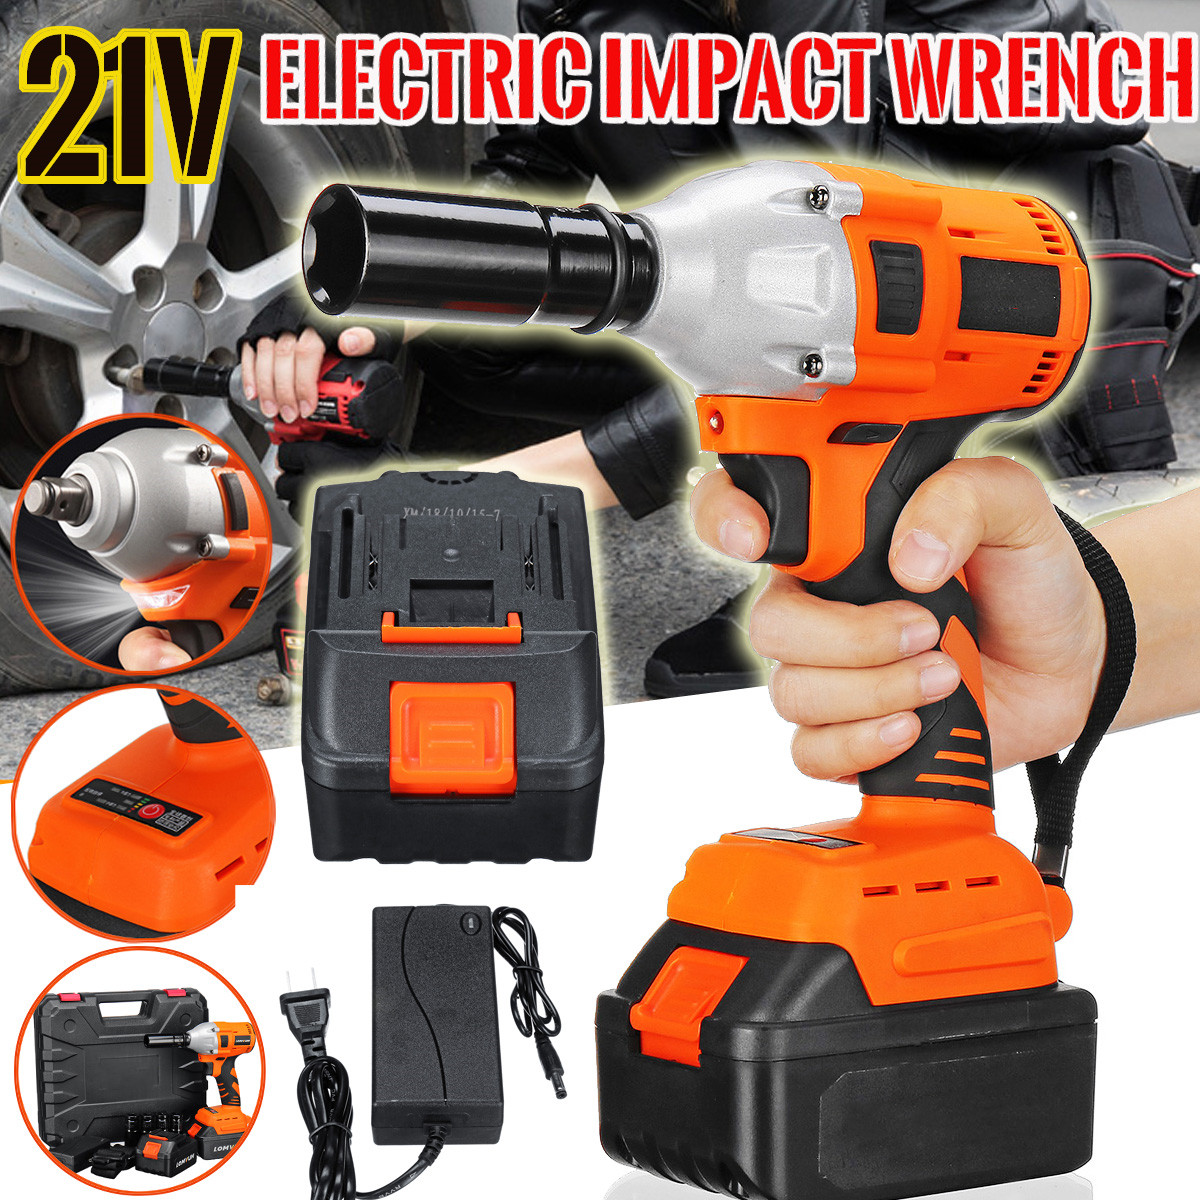 21V-16000mAh-Brushless-Impact-Wrench-LED-Light-Li-Ion-Battery-Cordless-Electric-Impact-Wrench-1397275-1